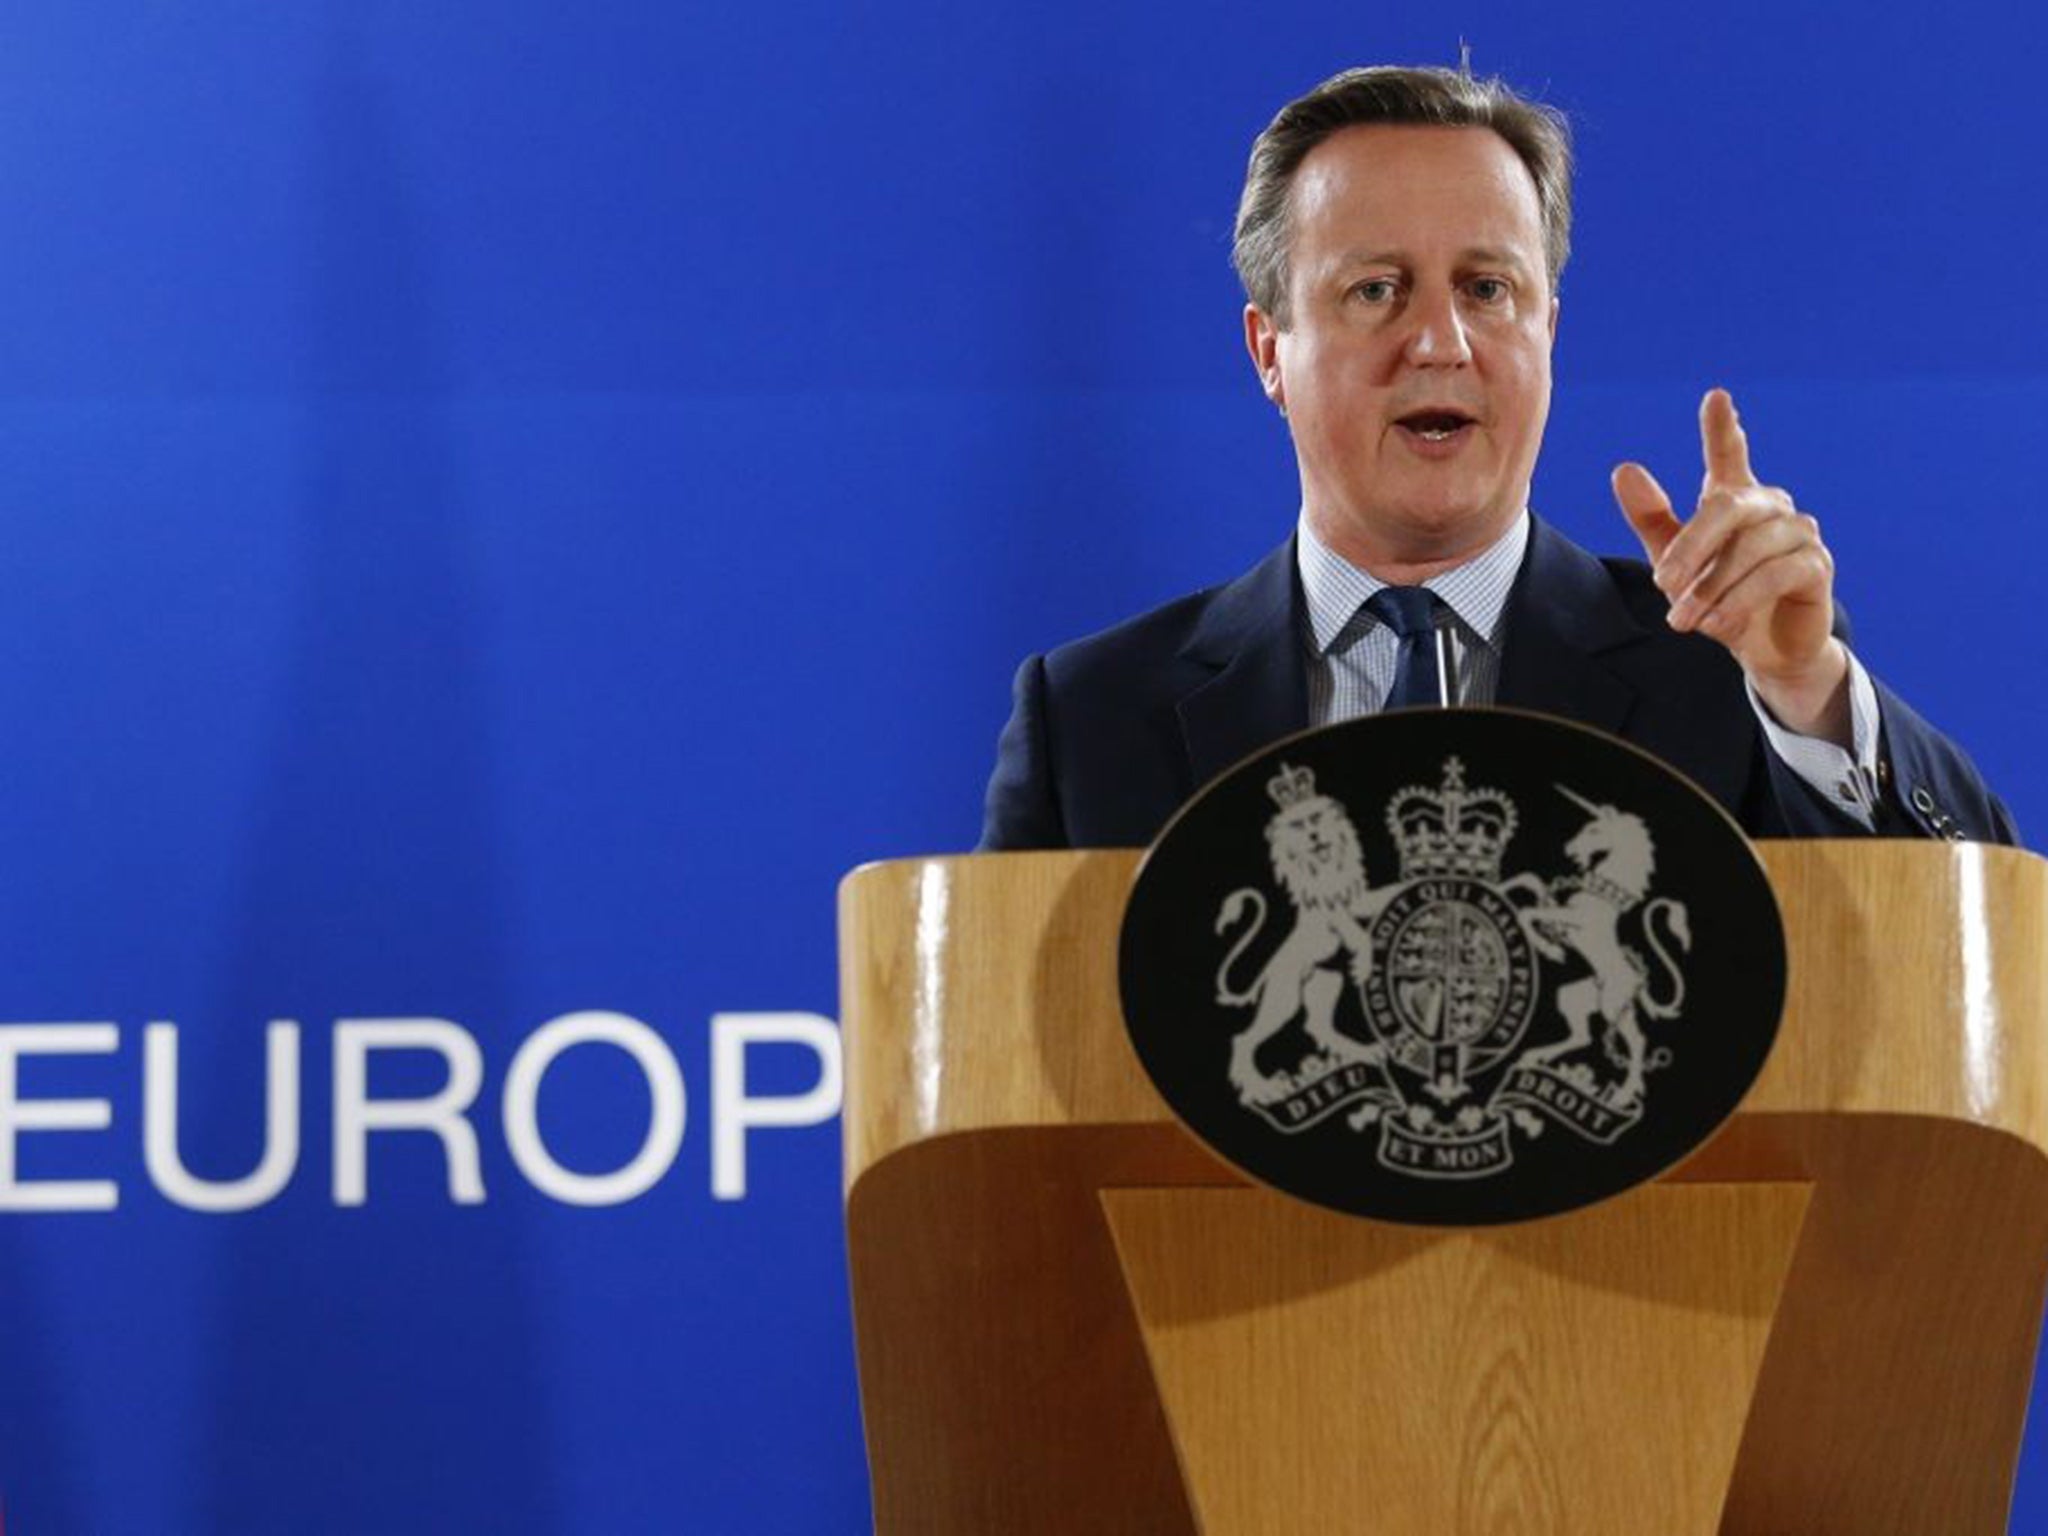 David Cameron said his EU partners 'universally respected' the British people's decision